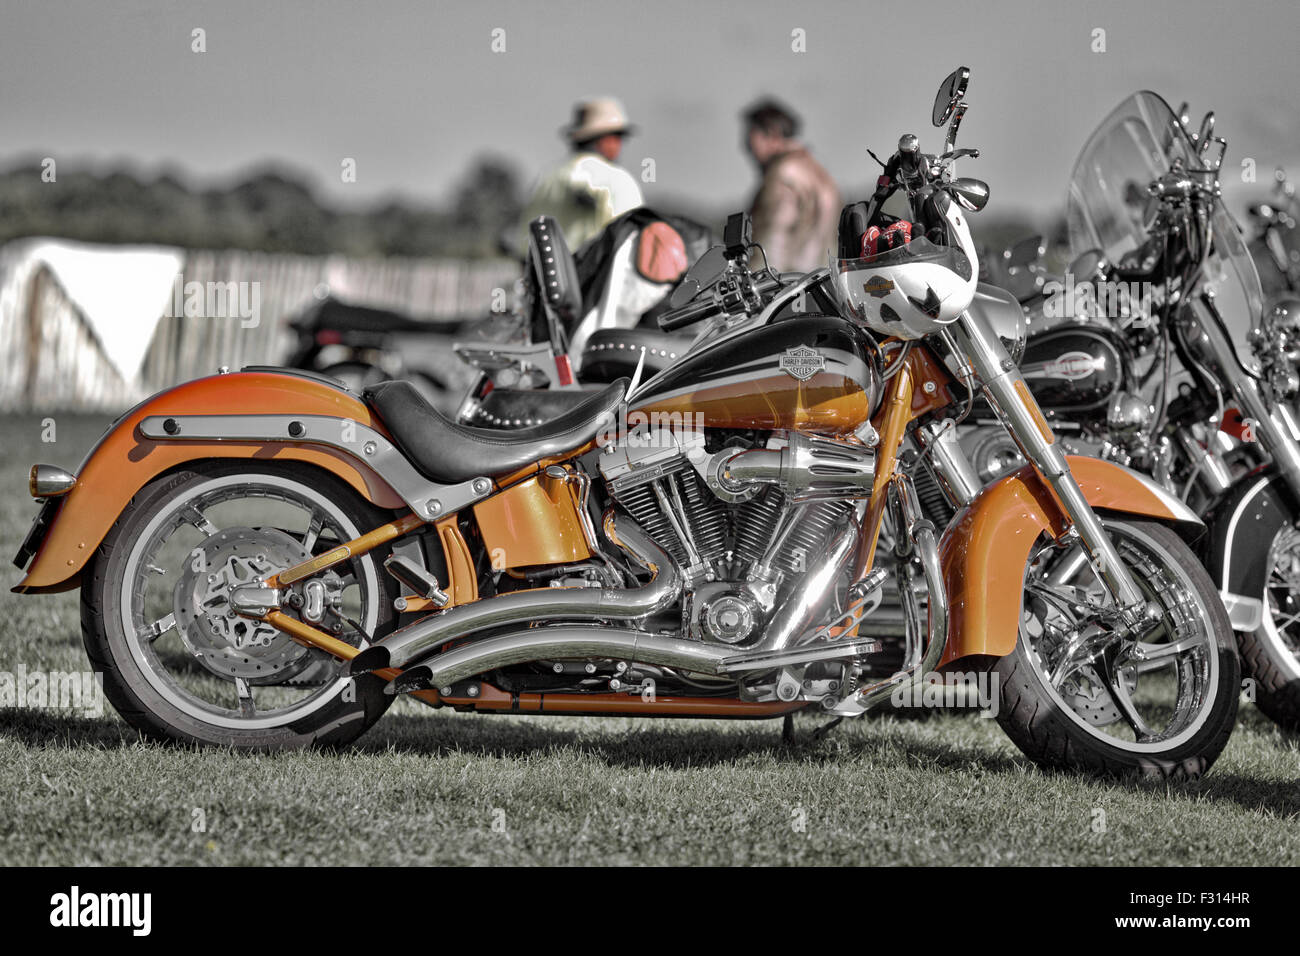 Harley Davidson Motorcycle HDR Stock Photo - Alamy